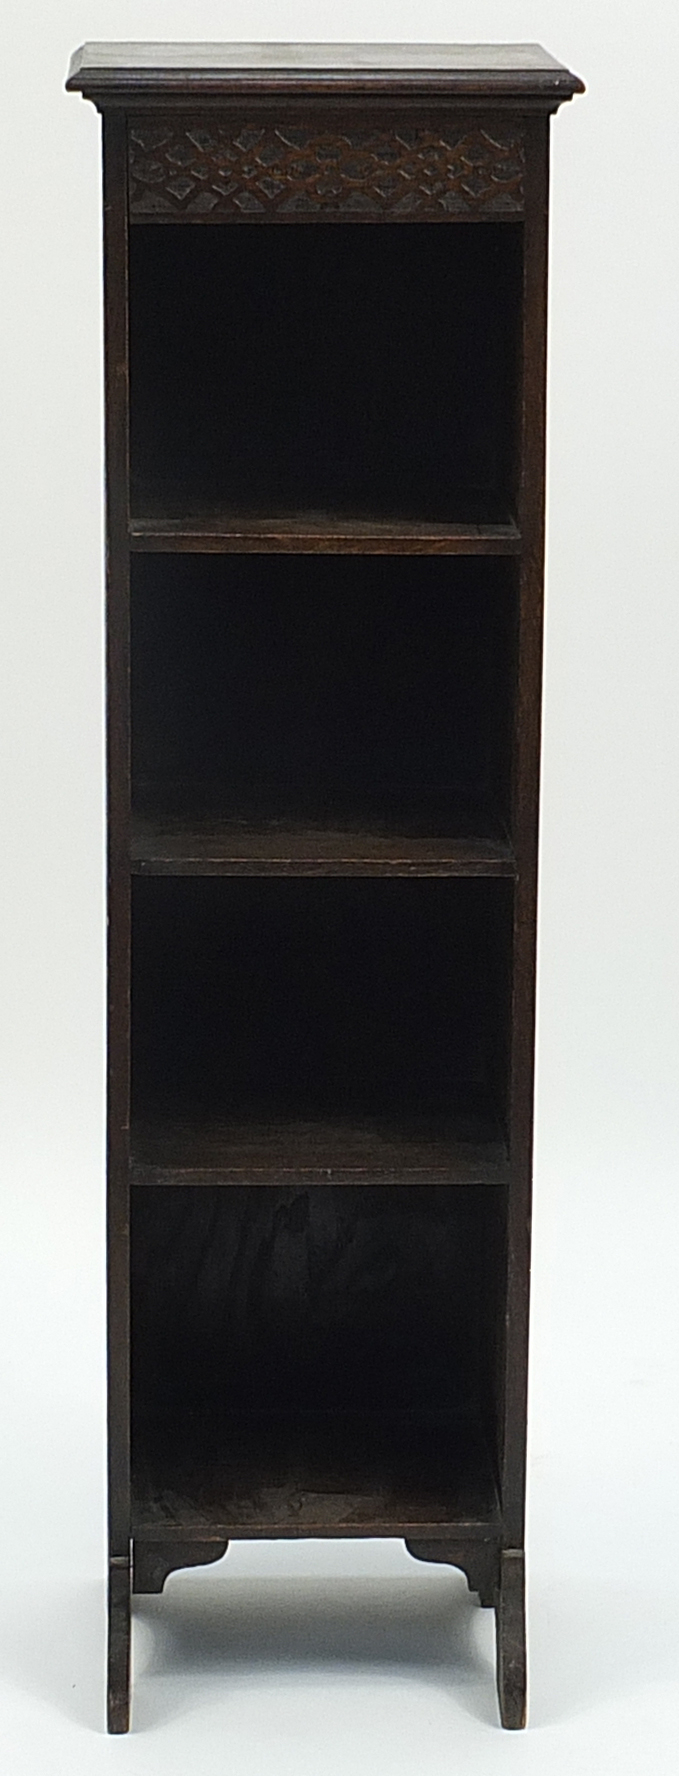 Slim oak bookcase with blind fretwork frieze, 104cm H x 30cm W x 22cm D